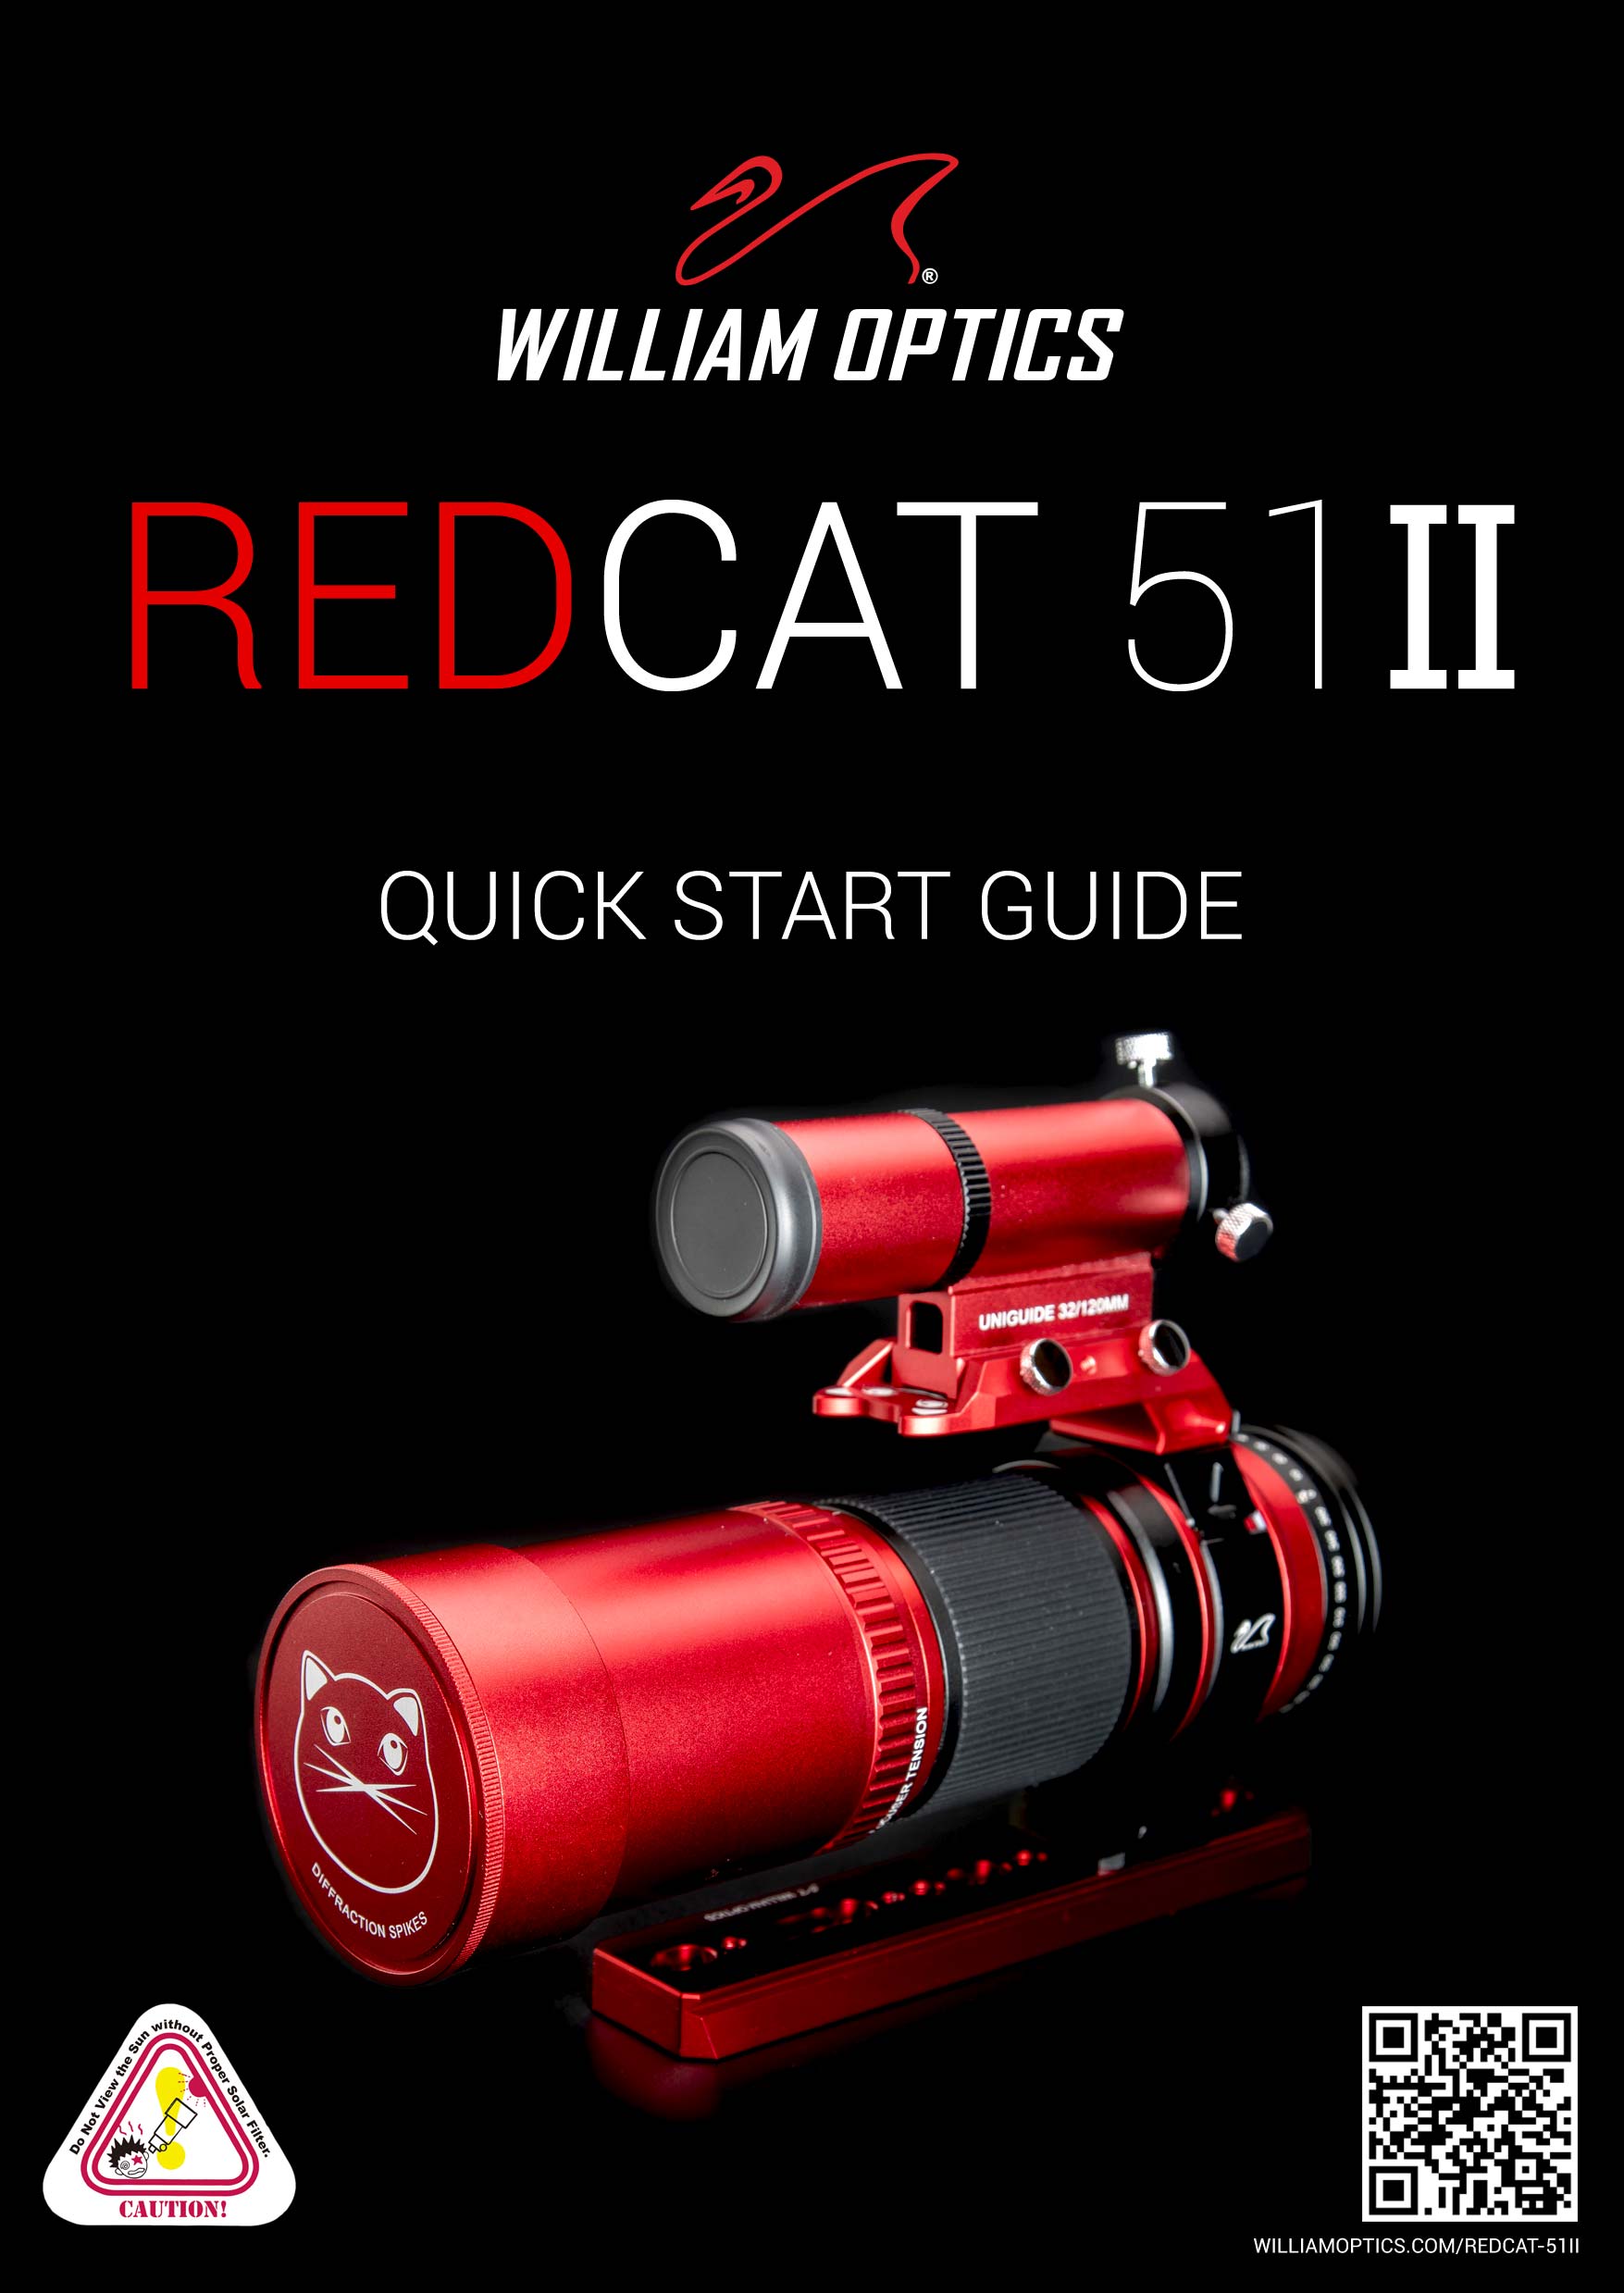 wo-redcat-51-ii-guide-1.jpg